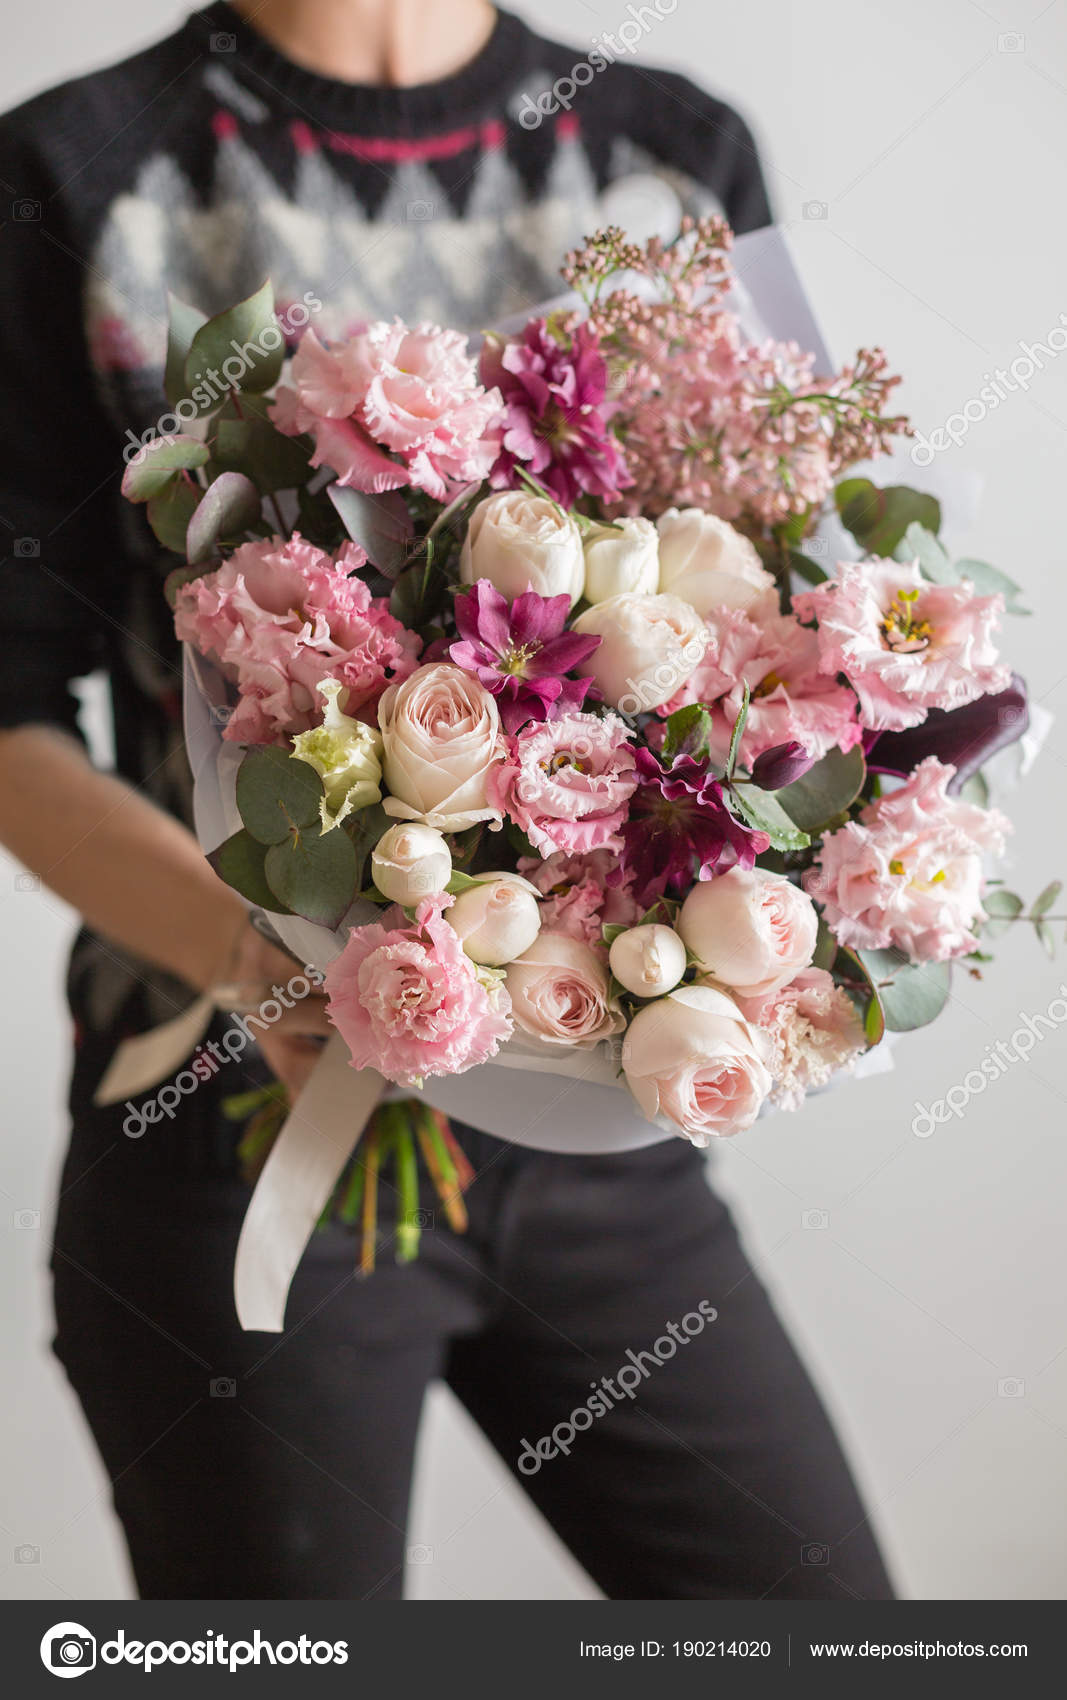 depositphotos_190214020-stock-photo-beautiful-luxury-bouquet-of-mixed.jpg